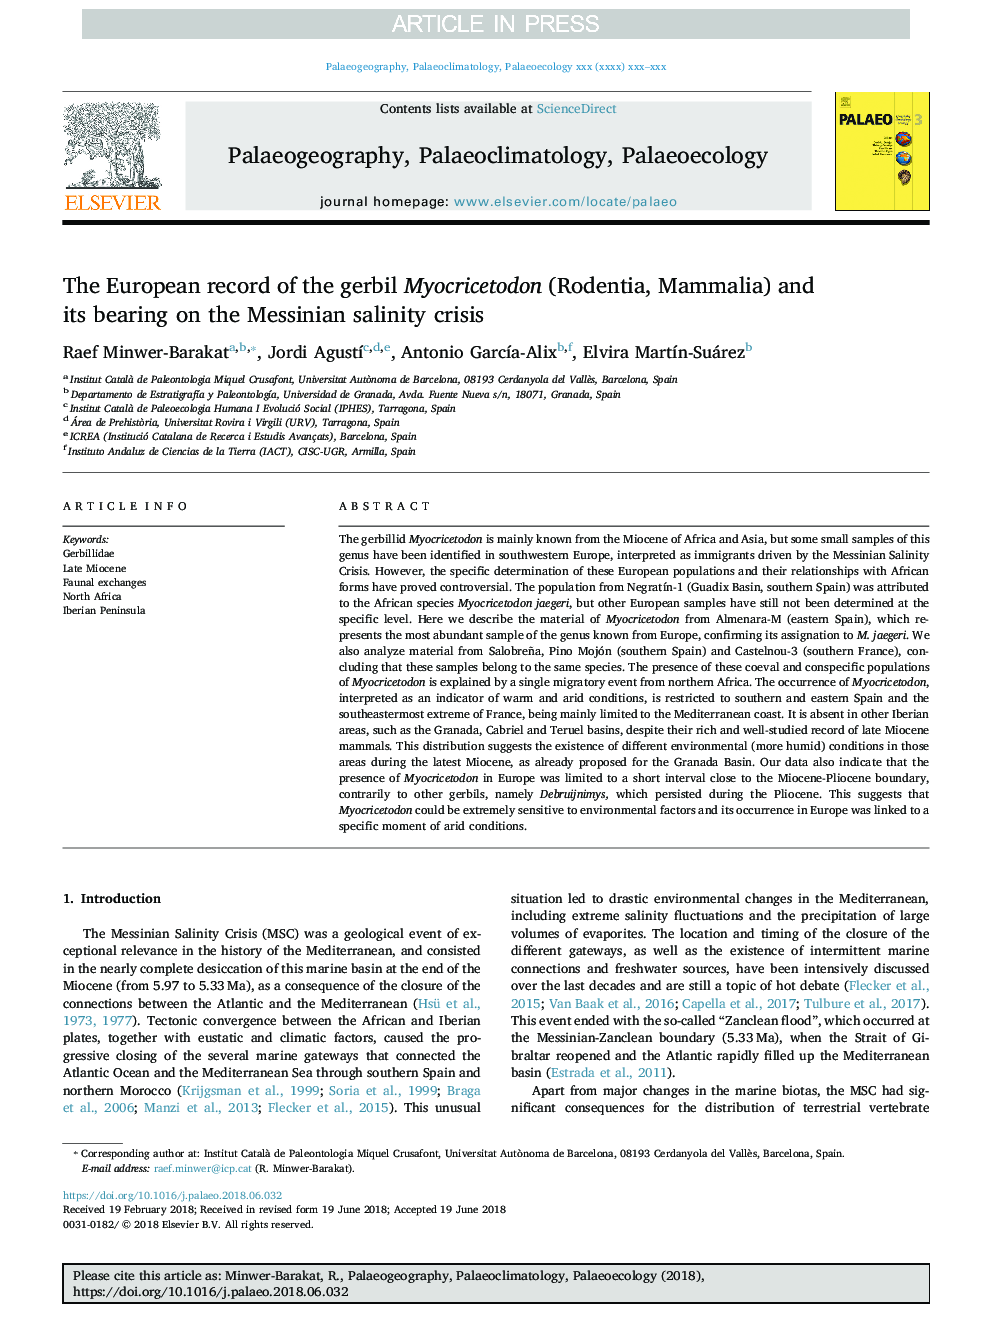 The European record of the gerbil Myocricetodon (Rodentia, Mammalia) and its bearing on the Messinian salinity crisis